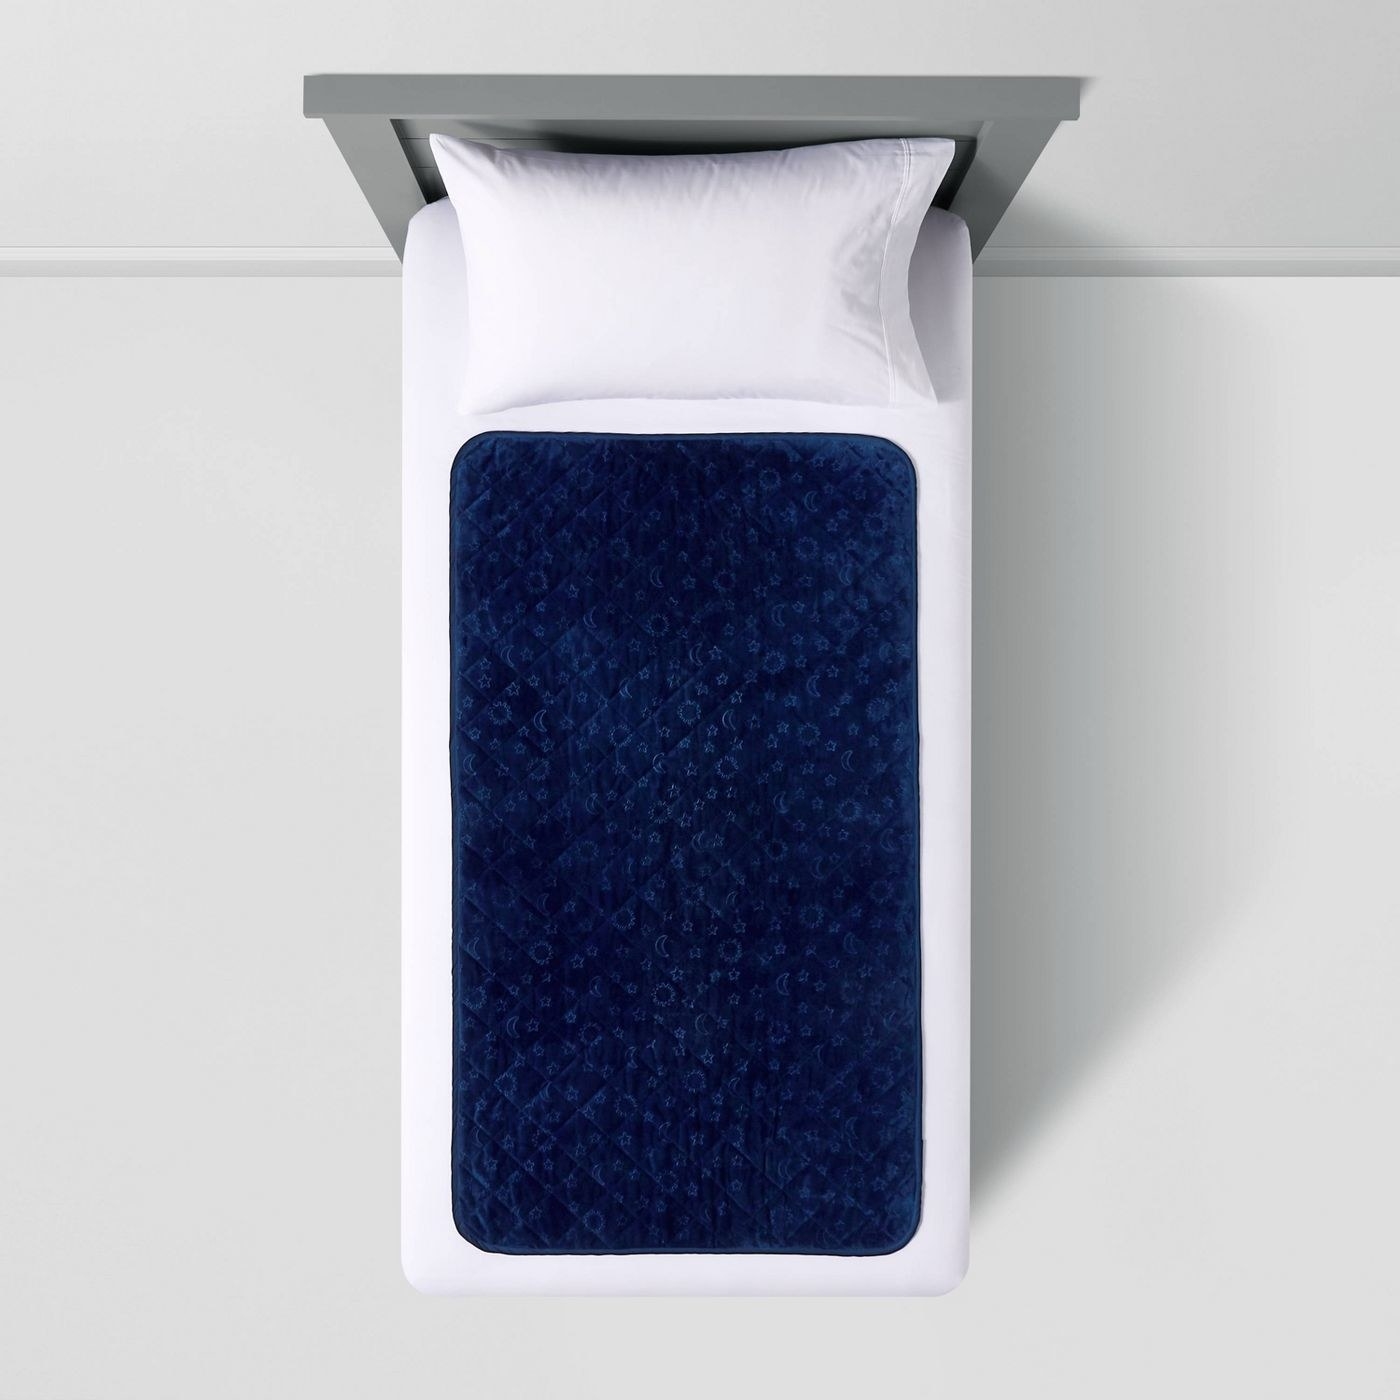 A blue sleep pad on a white bed